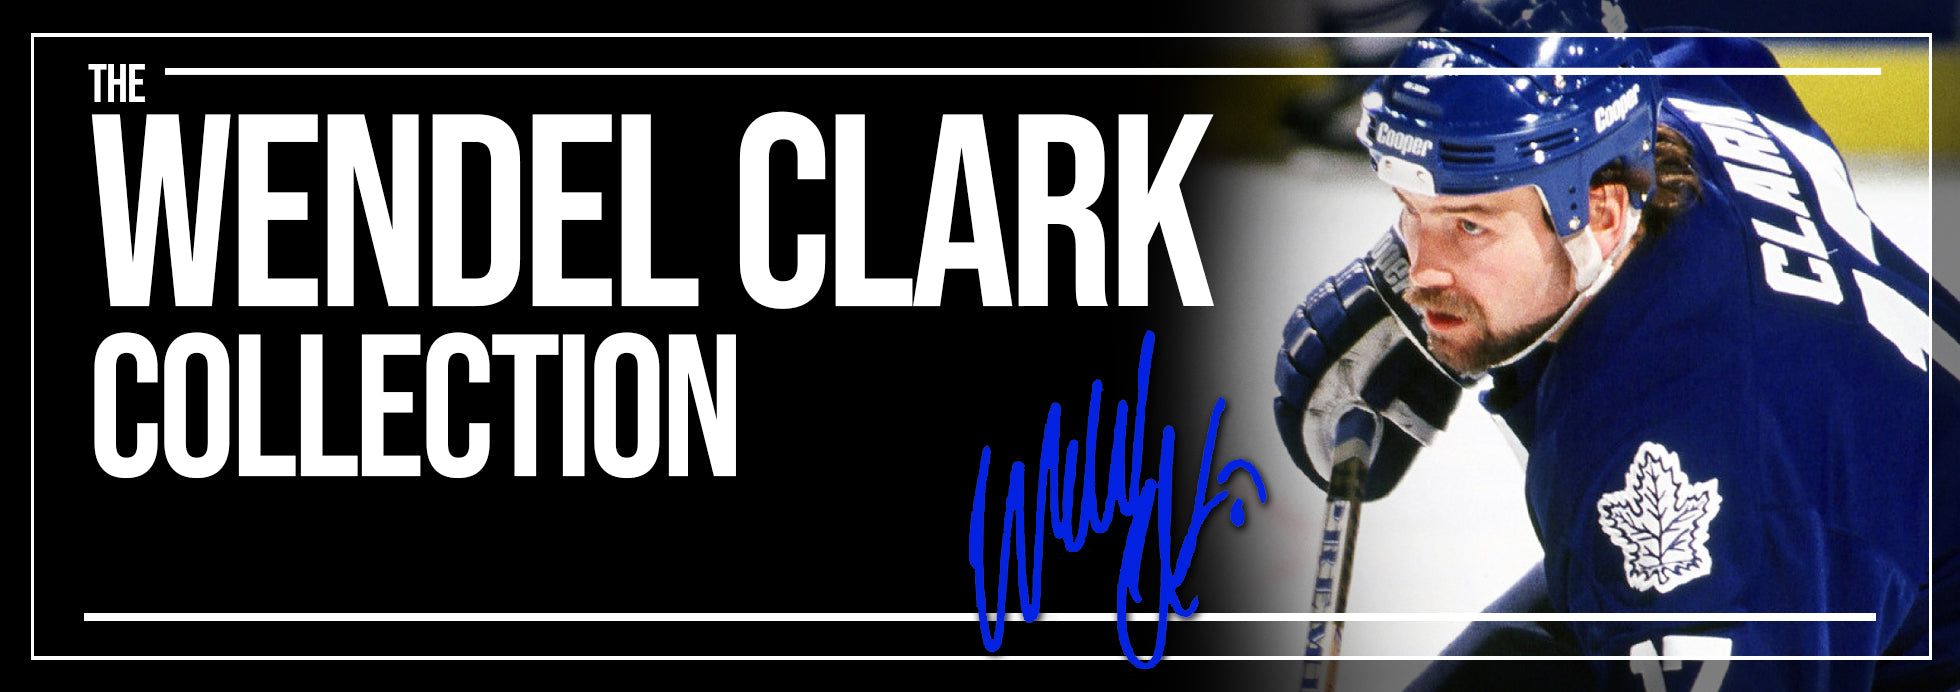 Wendel Clark Autographed Jersey - Pro